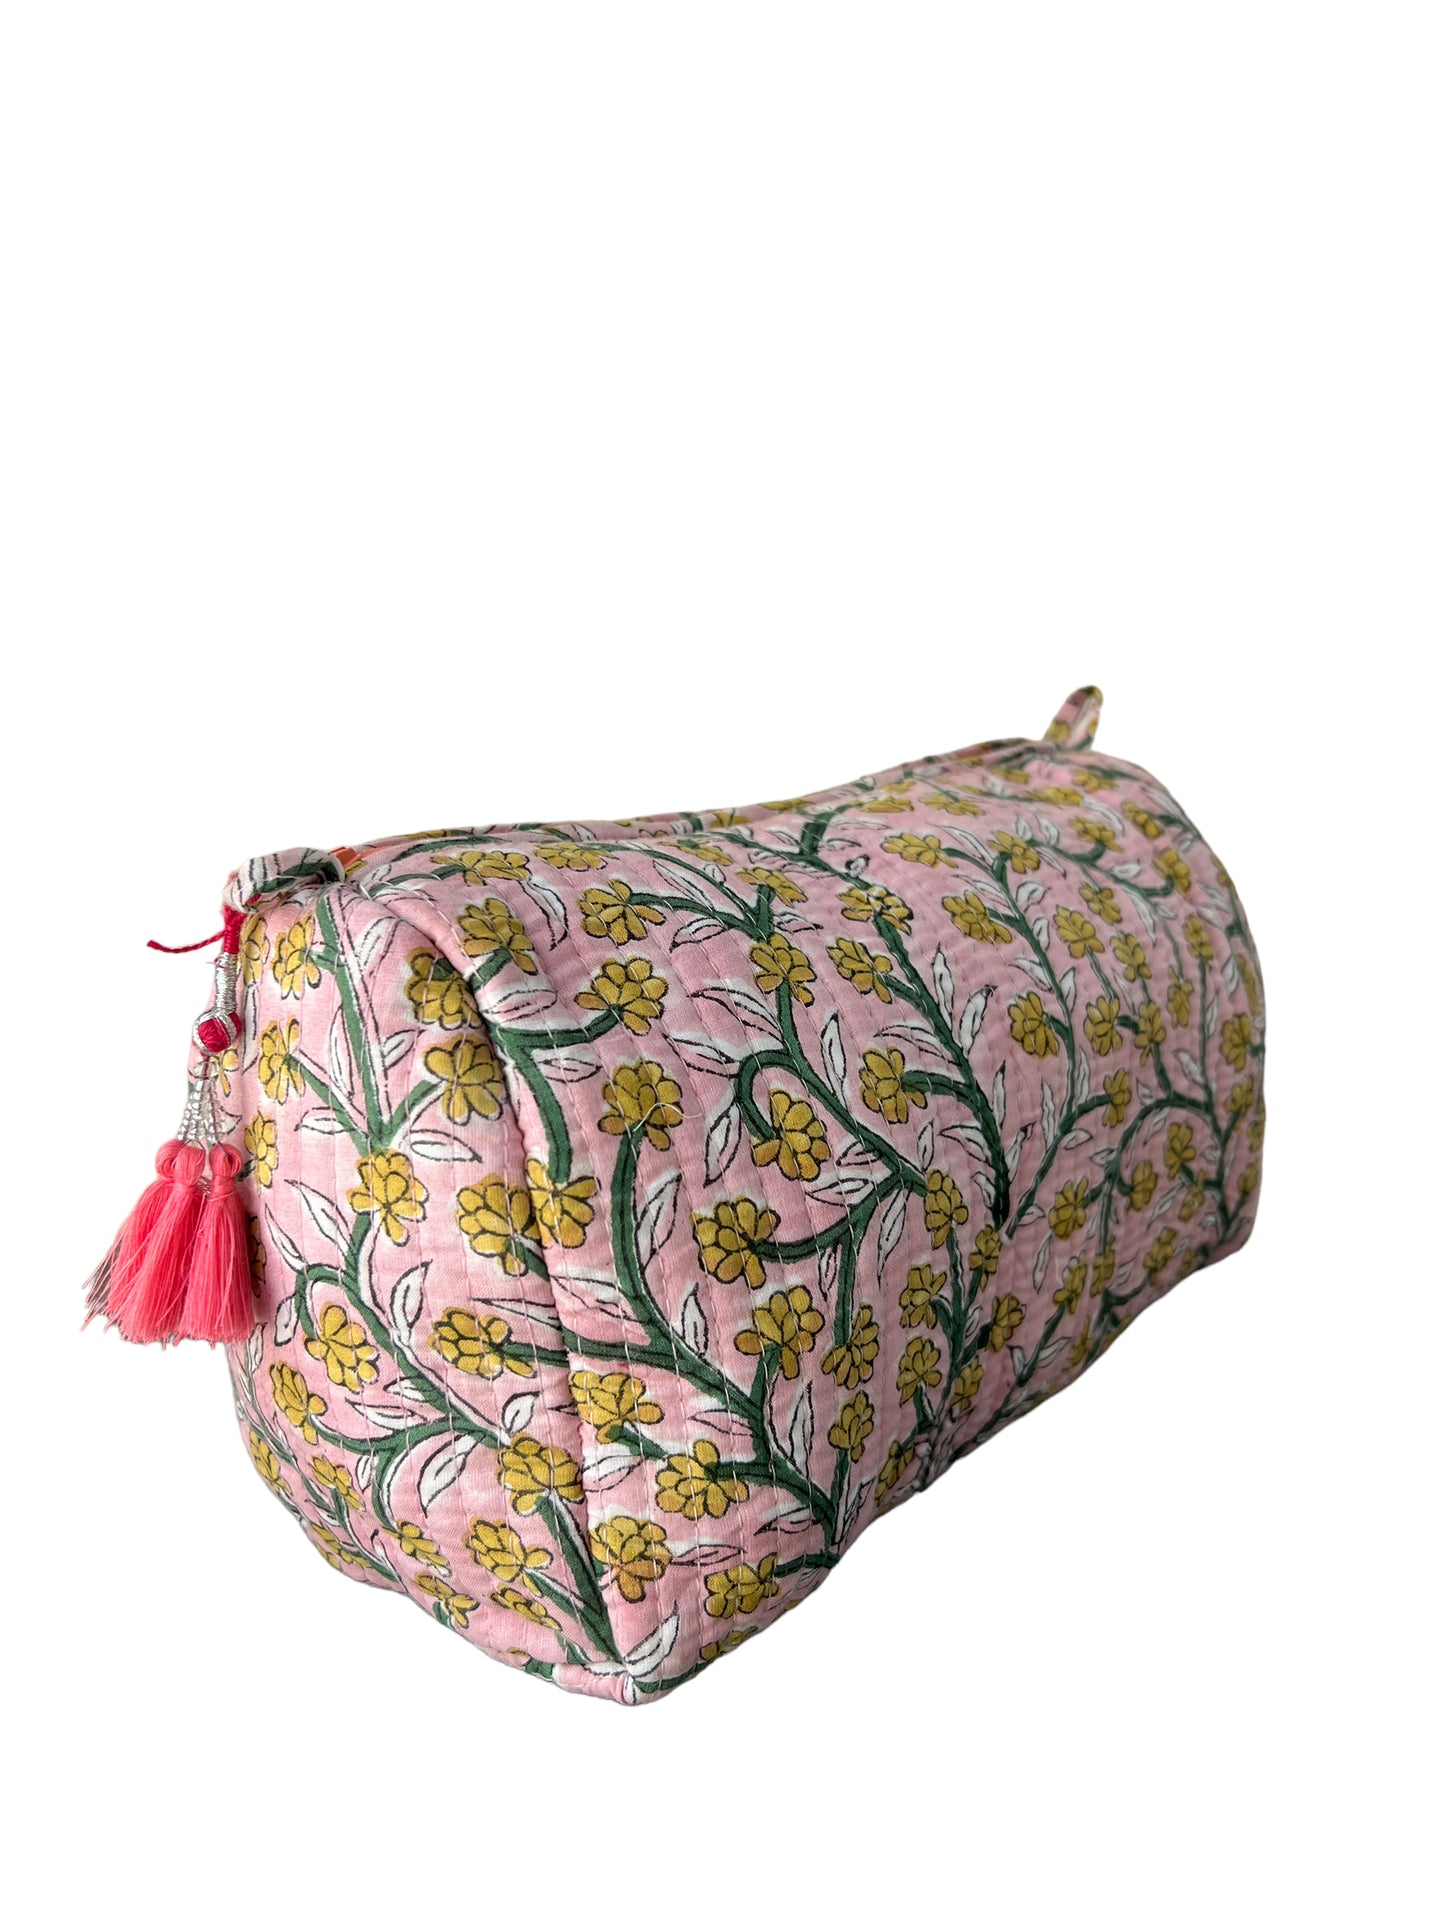 (M087) Make Up Bag Light Pink Yellow Flowers